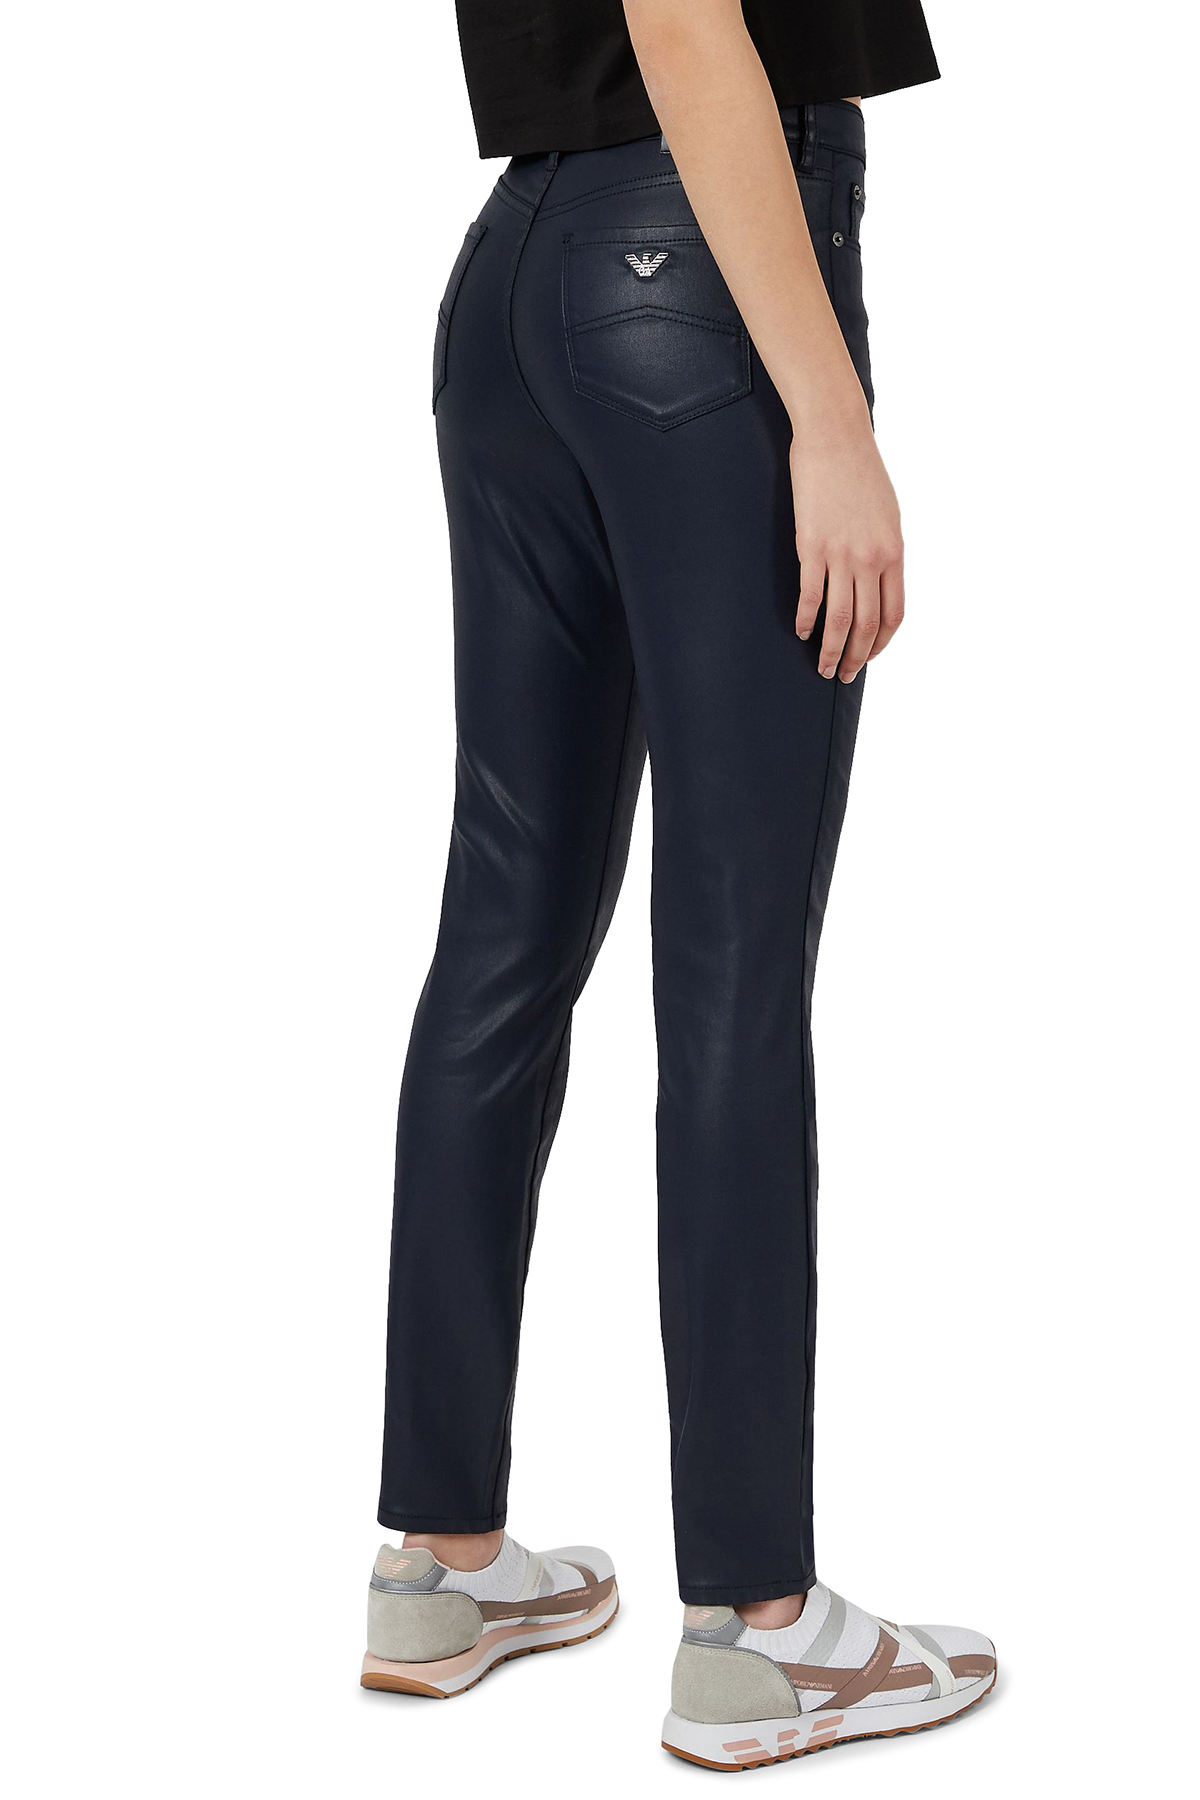 Emporio Armani Yüksek Bel Skinny J20 Jeans Bayan Pamuklu Pantolon 3K2J20 2NSWZ 0927 LACİVERT